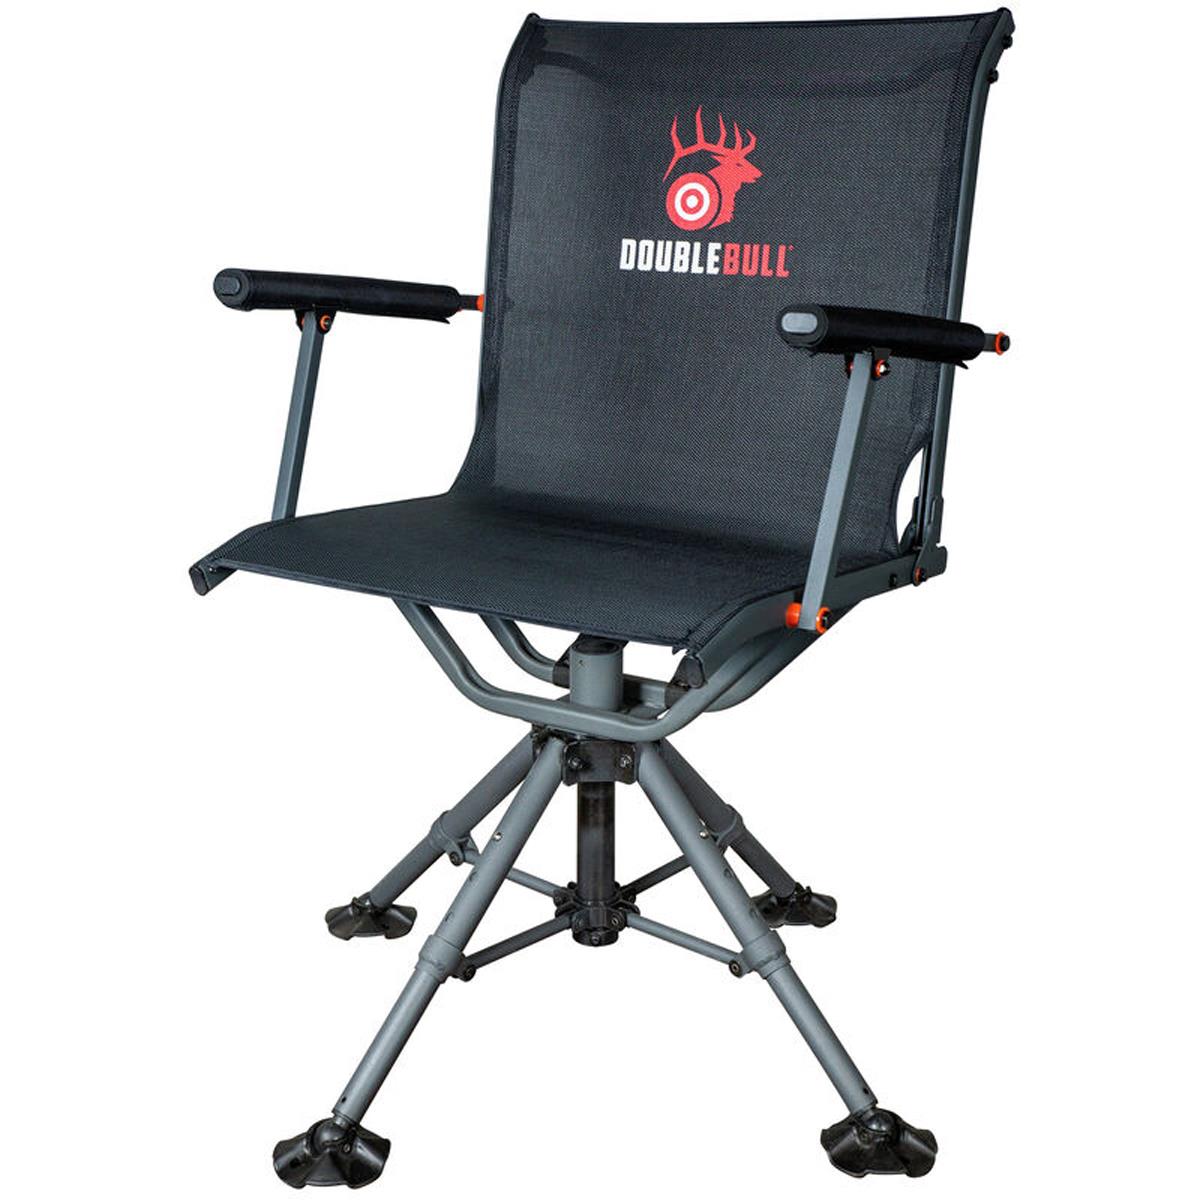 Image of Bushnell Double Bull Swivel Hunting Blind Chair